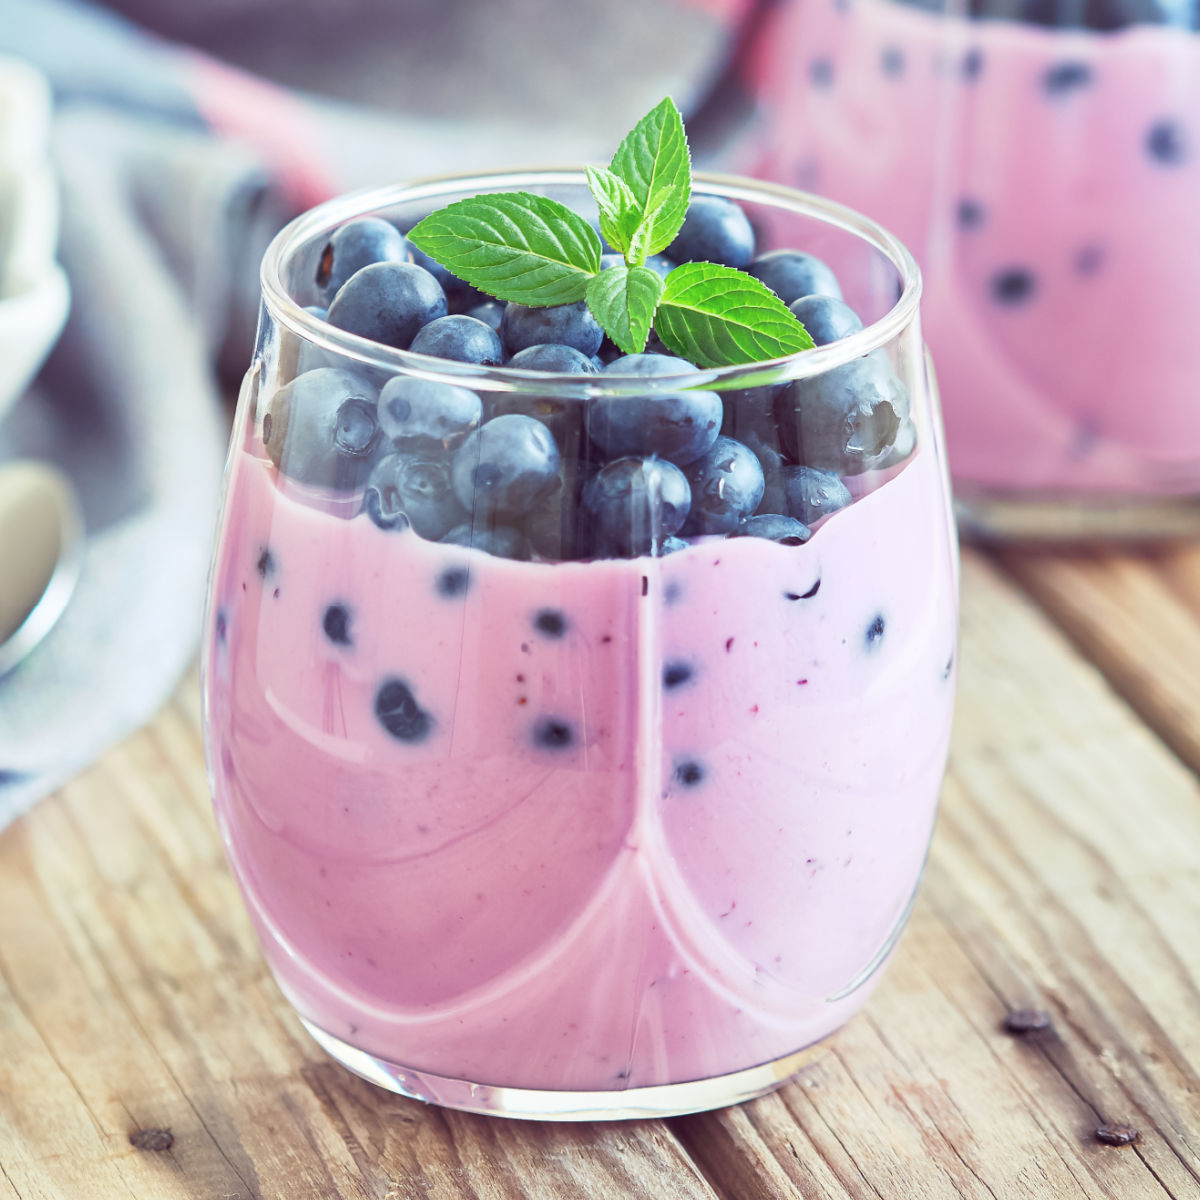 Blueberry yogurt.